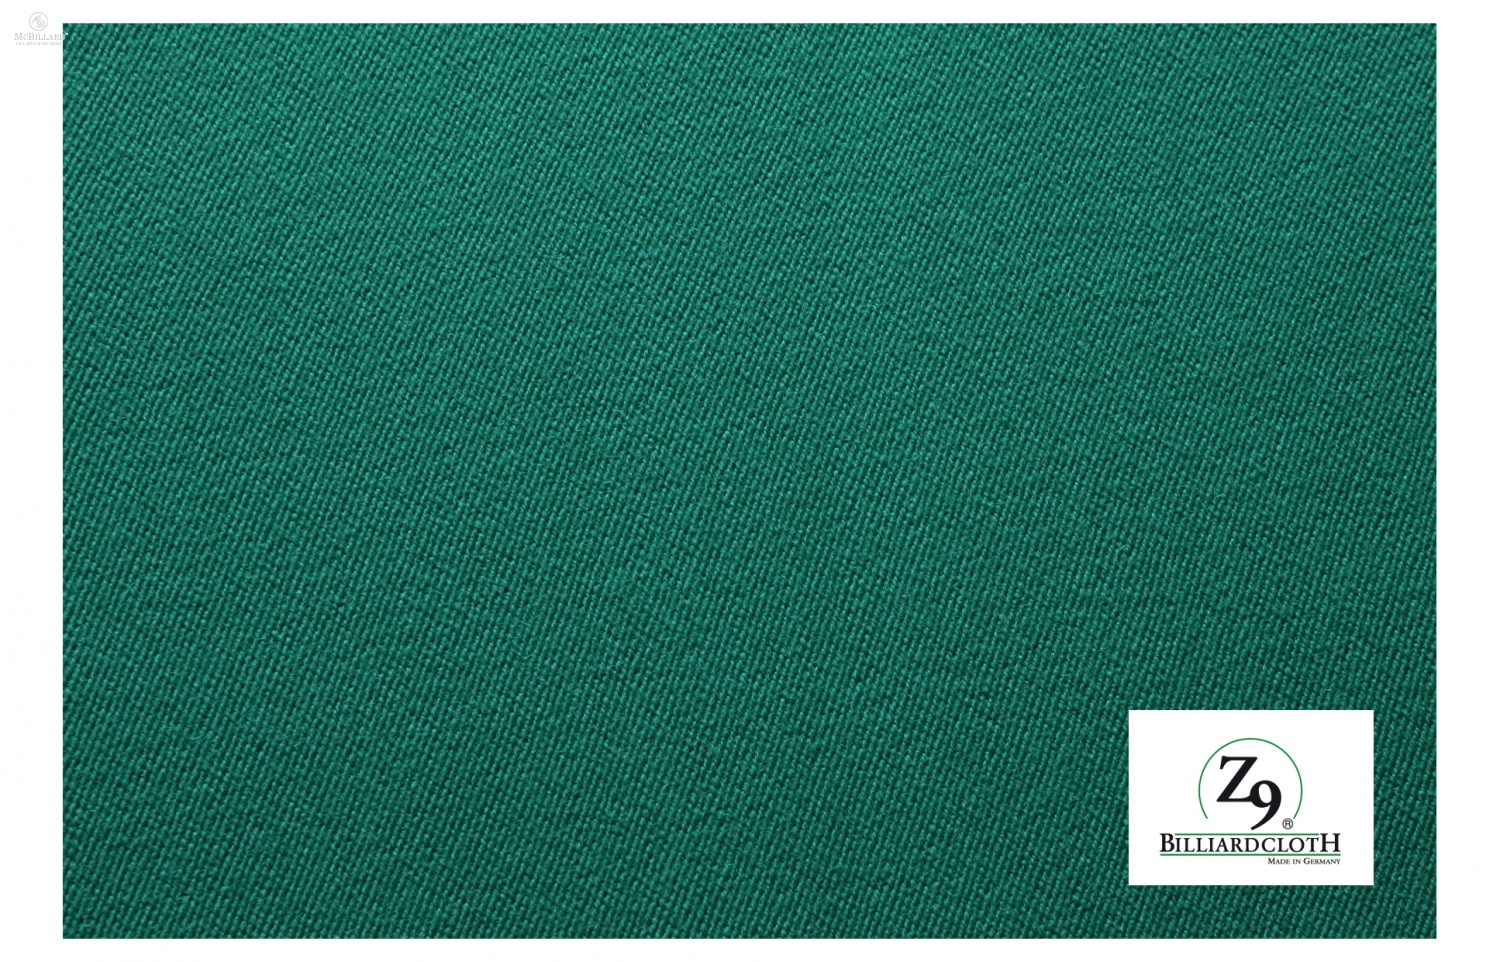 Billiards Cloth Z9 BilliardCloth® - 170 cm width, Classic Green